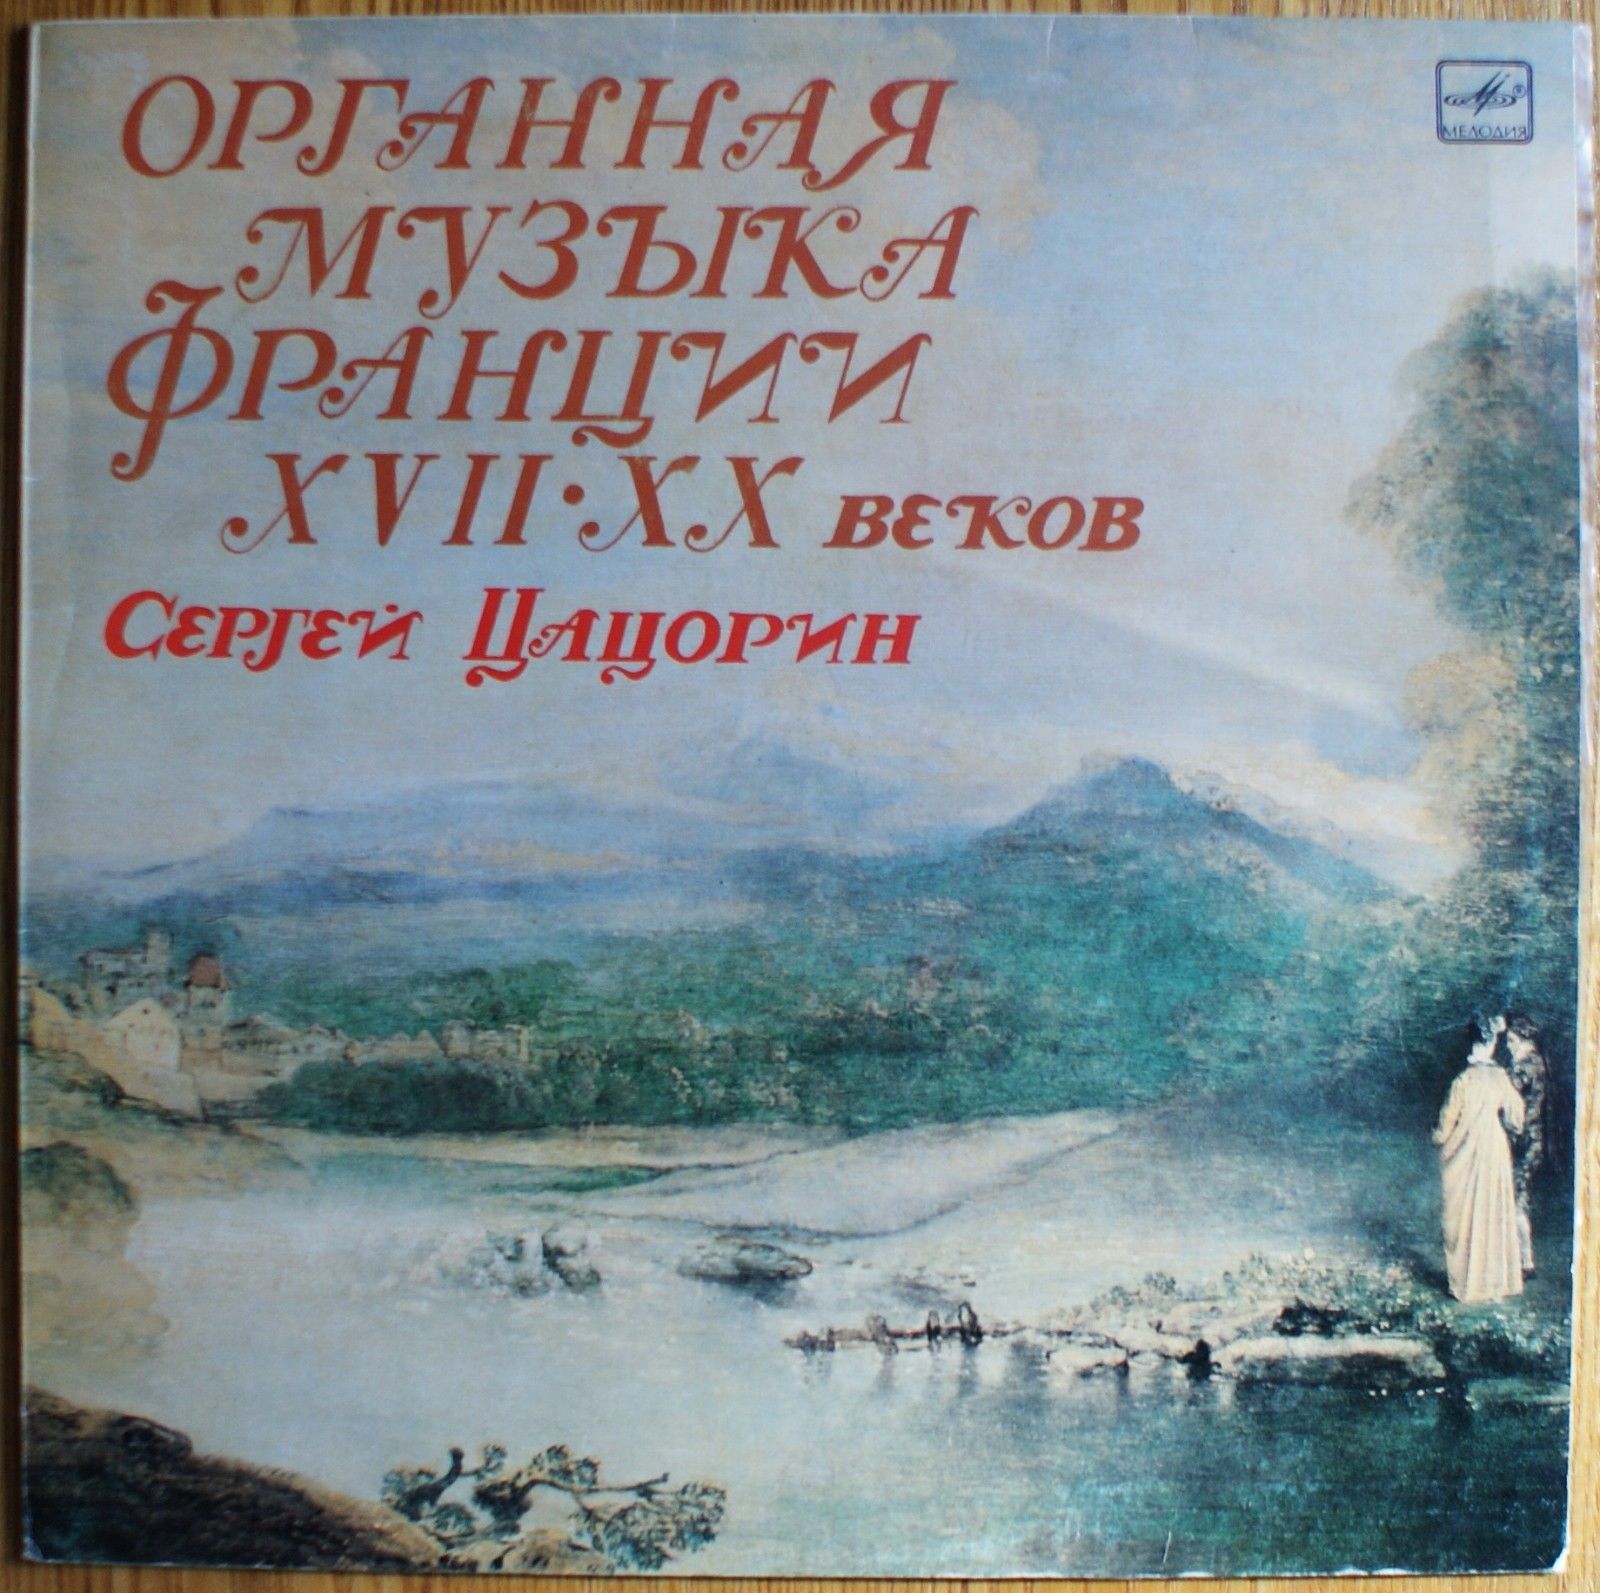 Сергей Цацорин (орган) - Органная музыка Франции XVII-XX веков